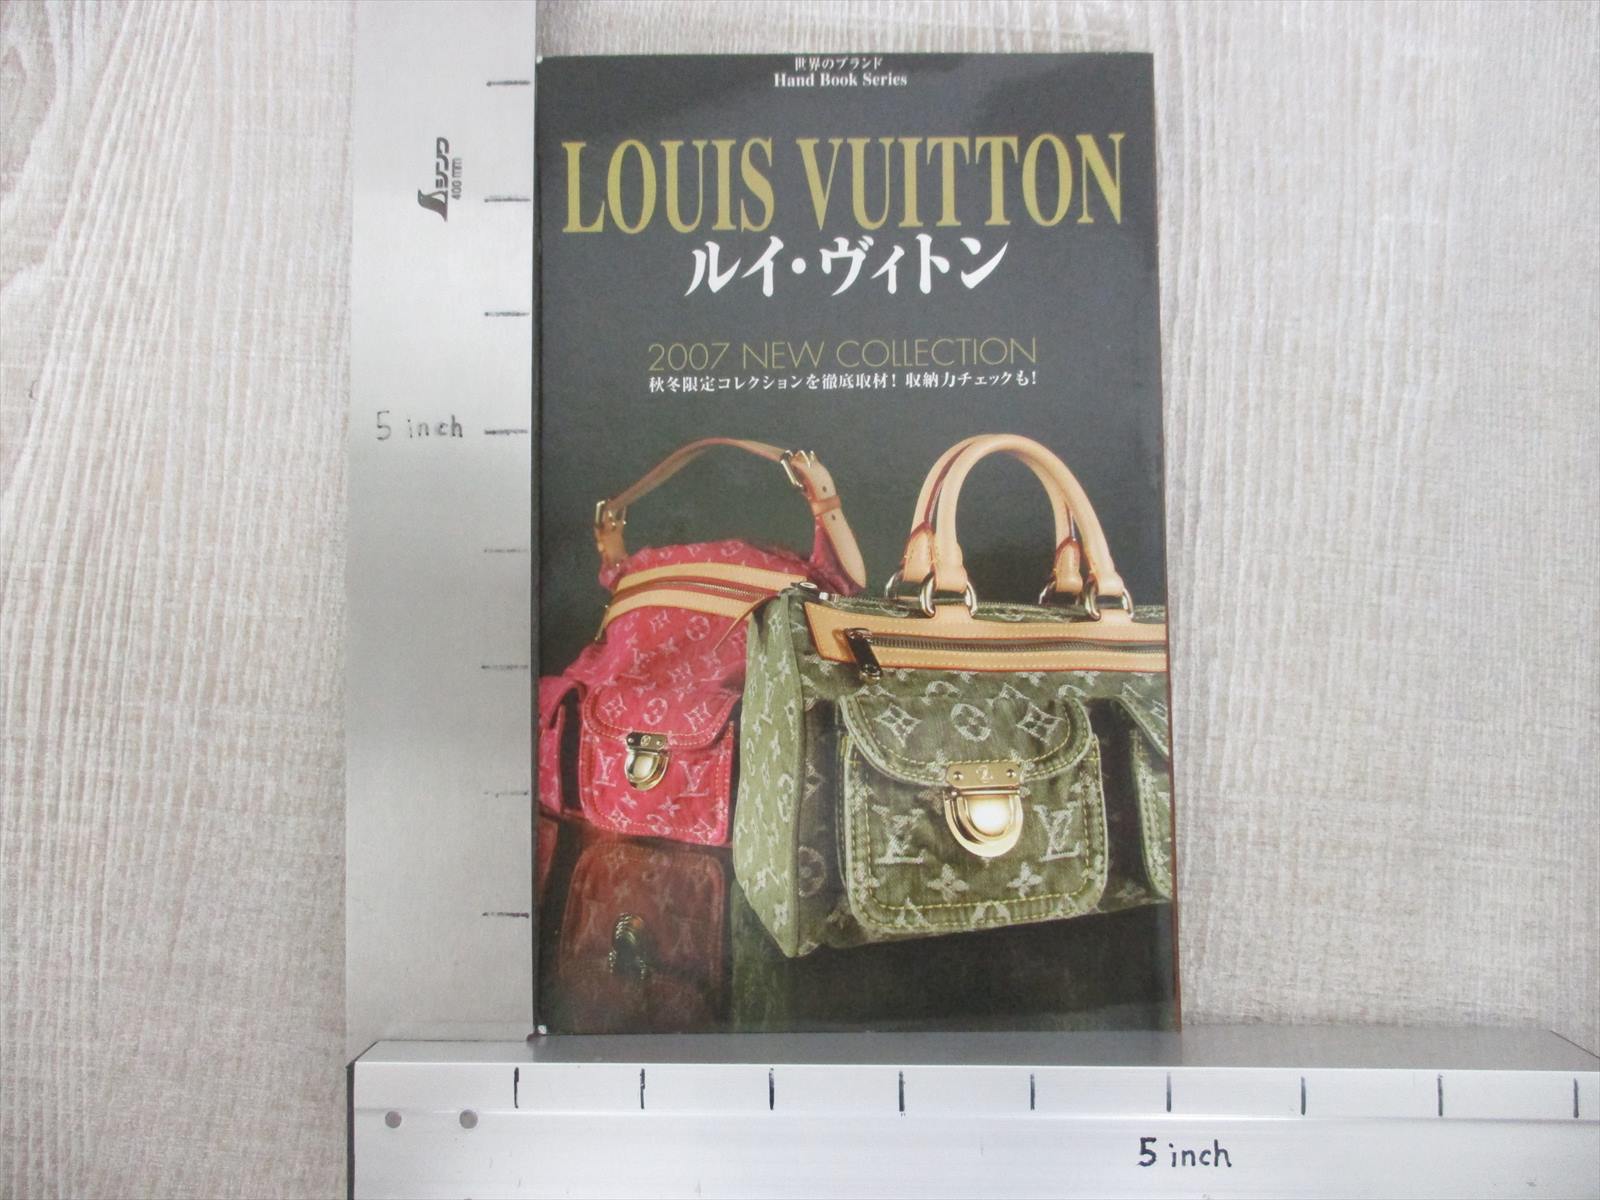 LOUIS VUITTON 2007 New Collection Art Fan Photo Book Guide Catalog Fashion Mode | eBay